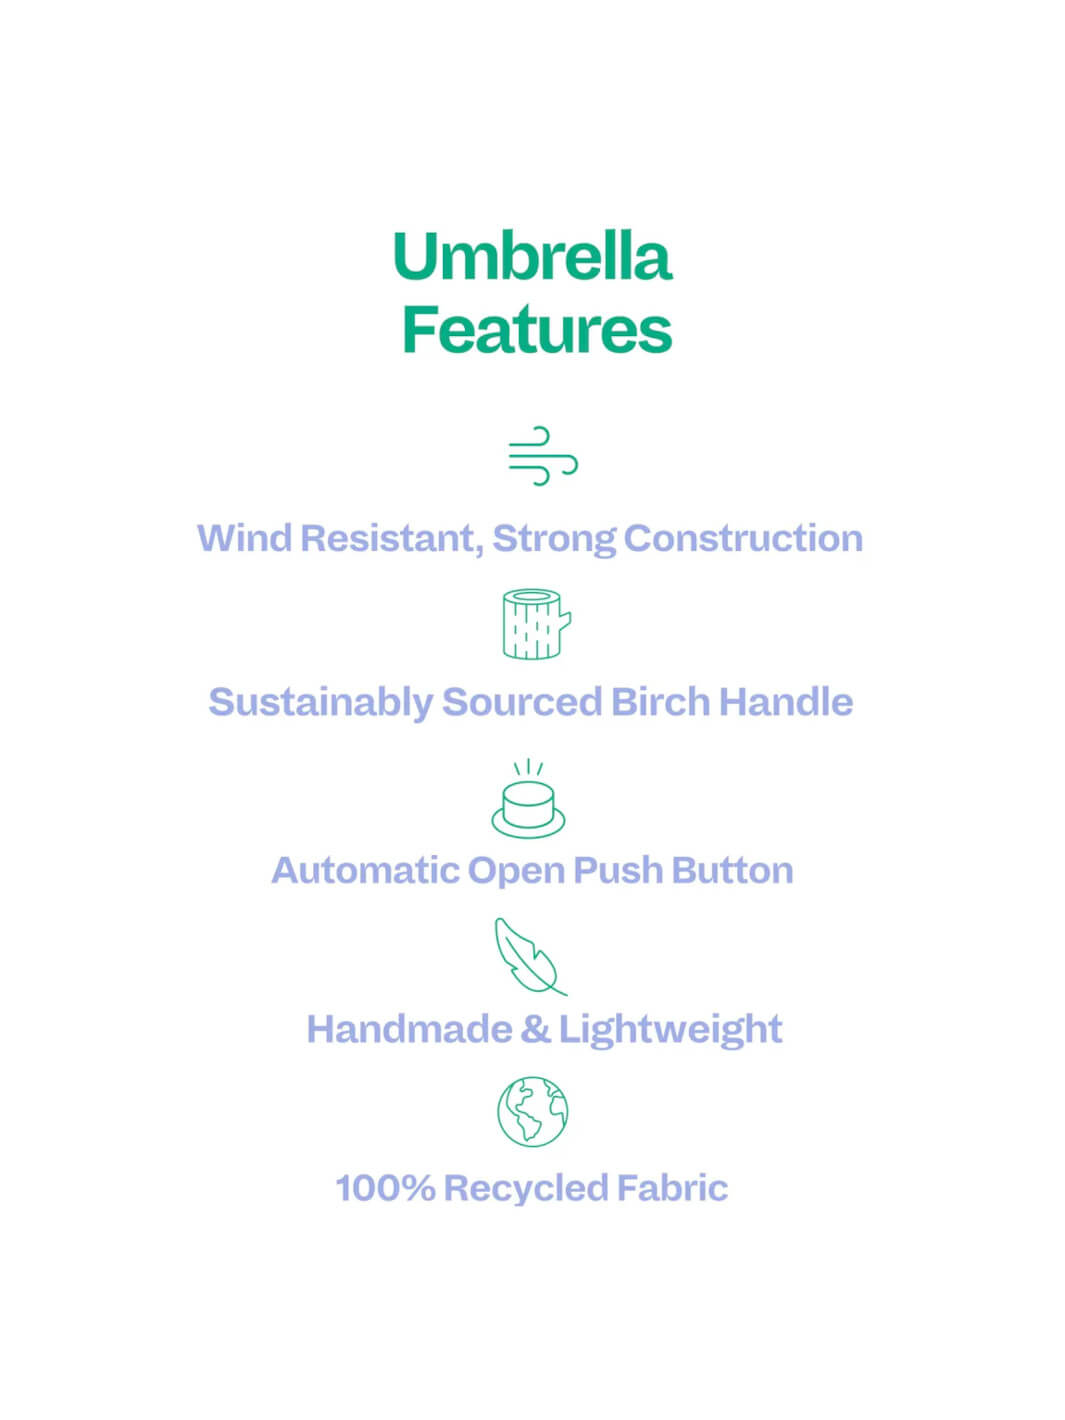 Compact Umbrella Features